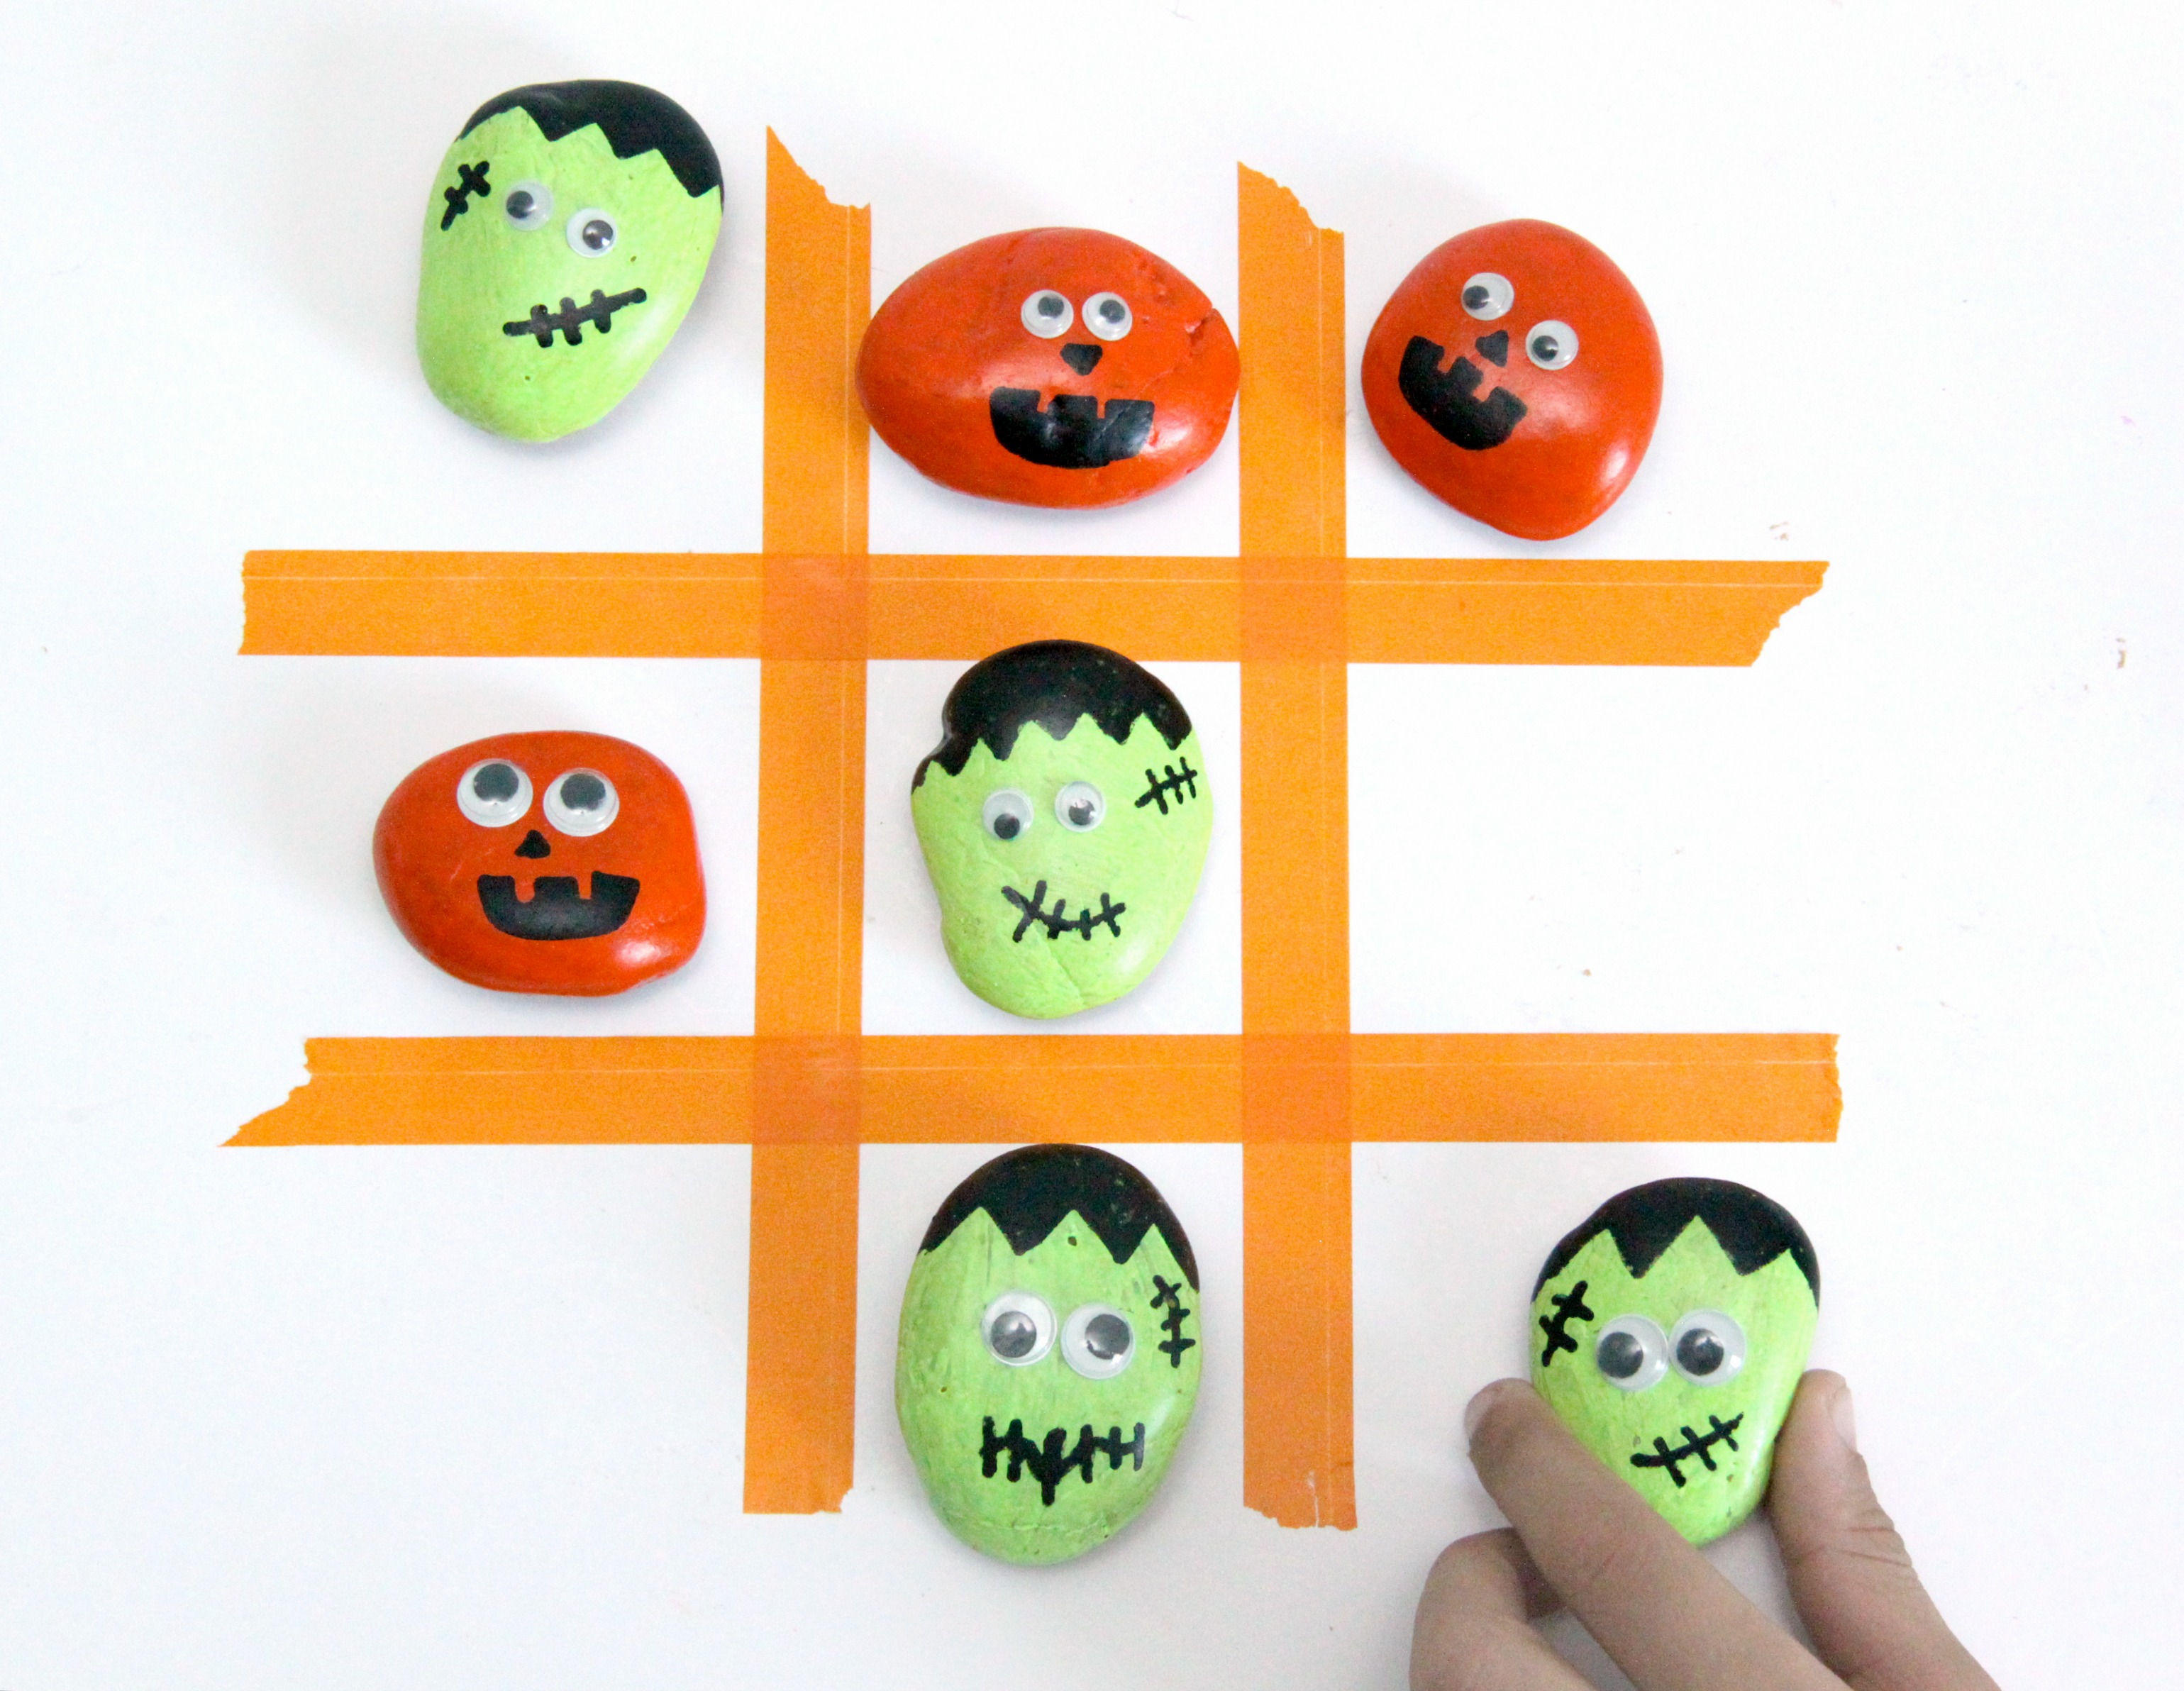 DIY Rock Tic-Tac-Toe Game Ideas • Color Made Happy